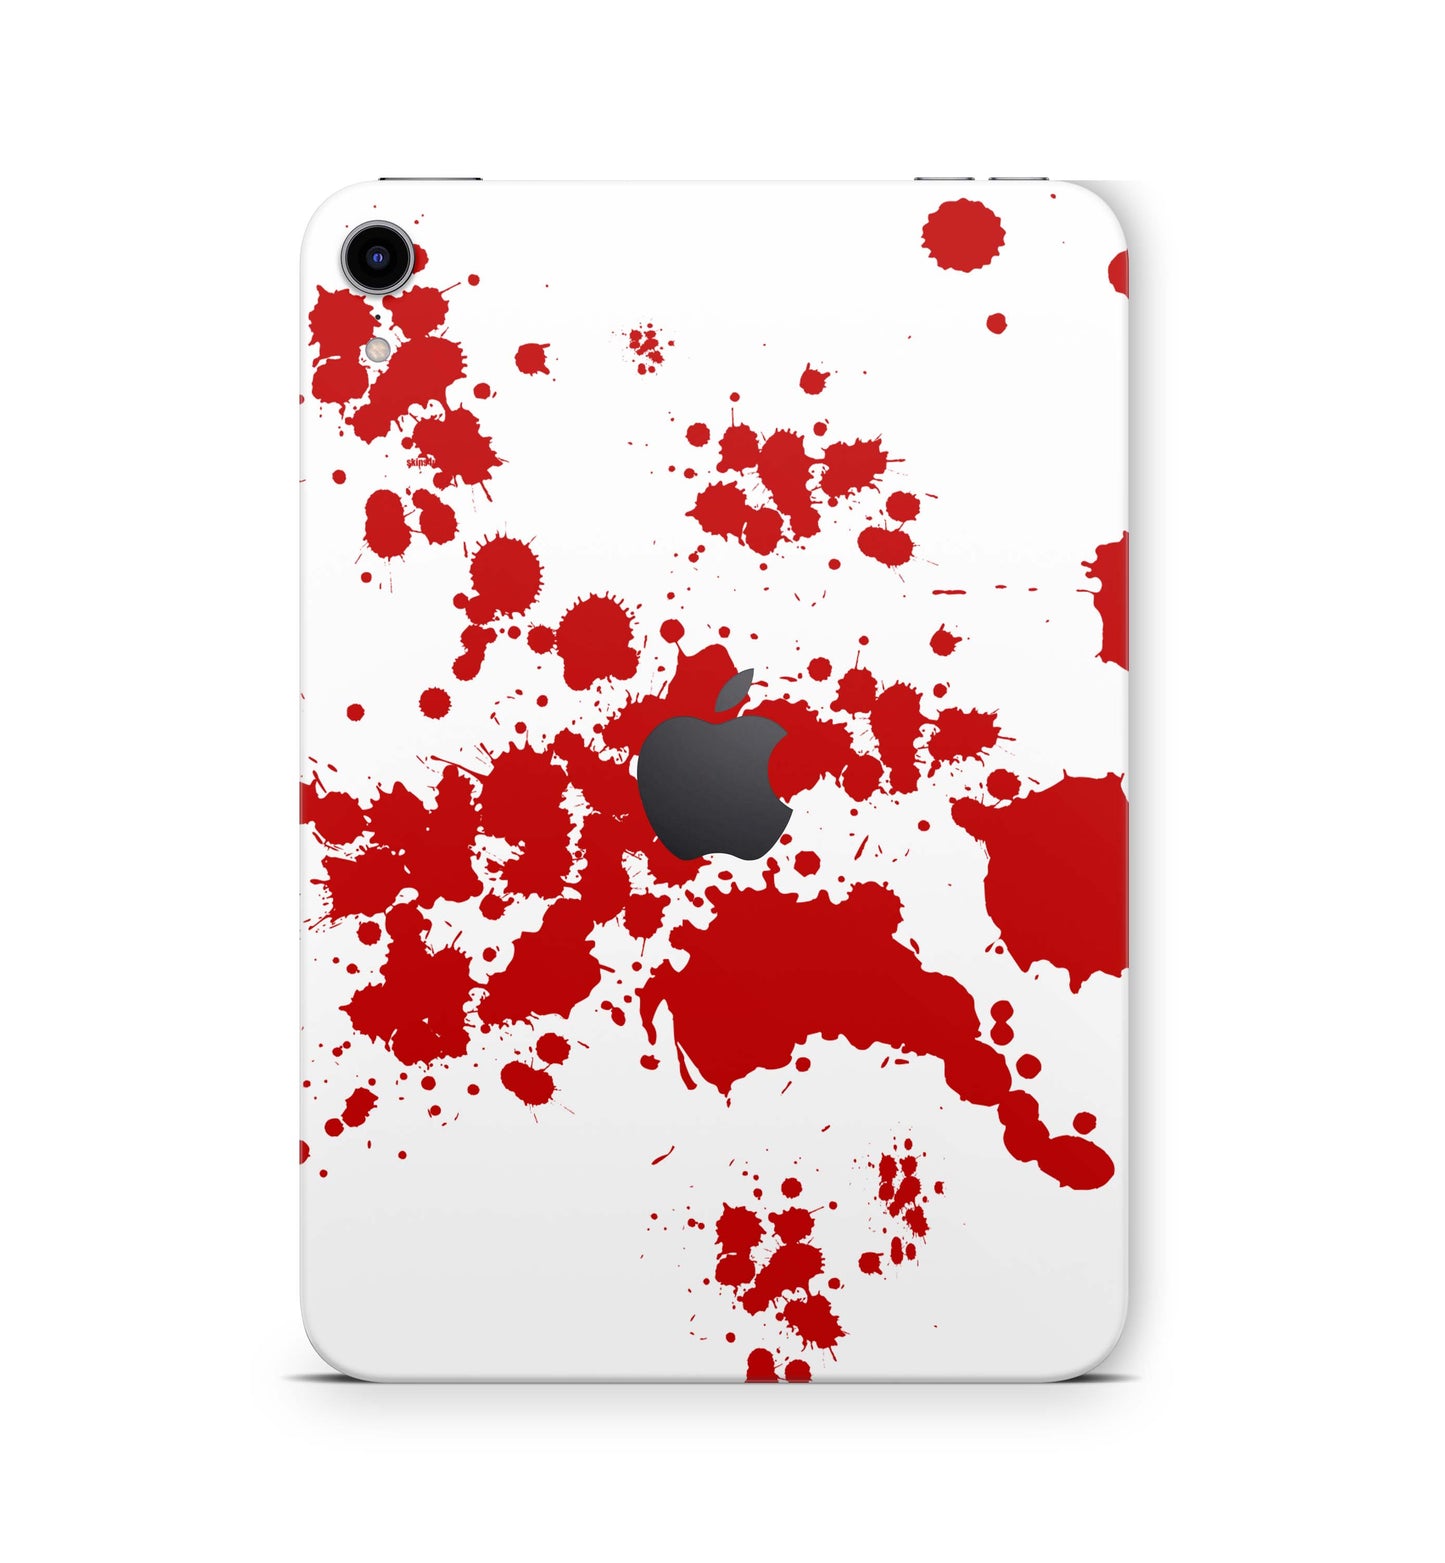 iPad Air Skin Design Cover Folie Vinyl Skins & Wraps für alle iPad Air Modelle Aufkleber Skins4u Blood  